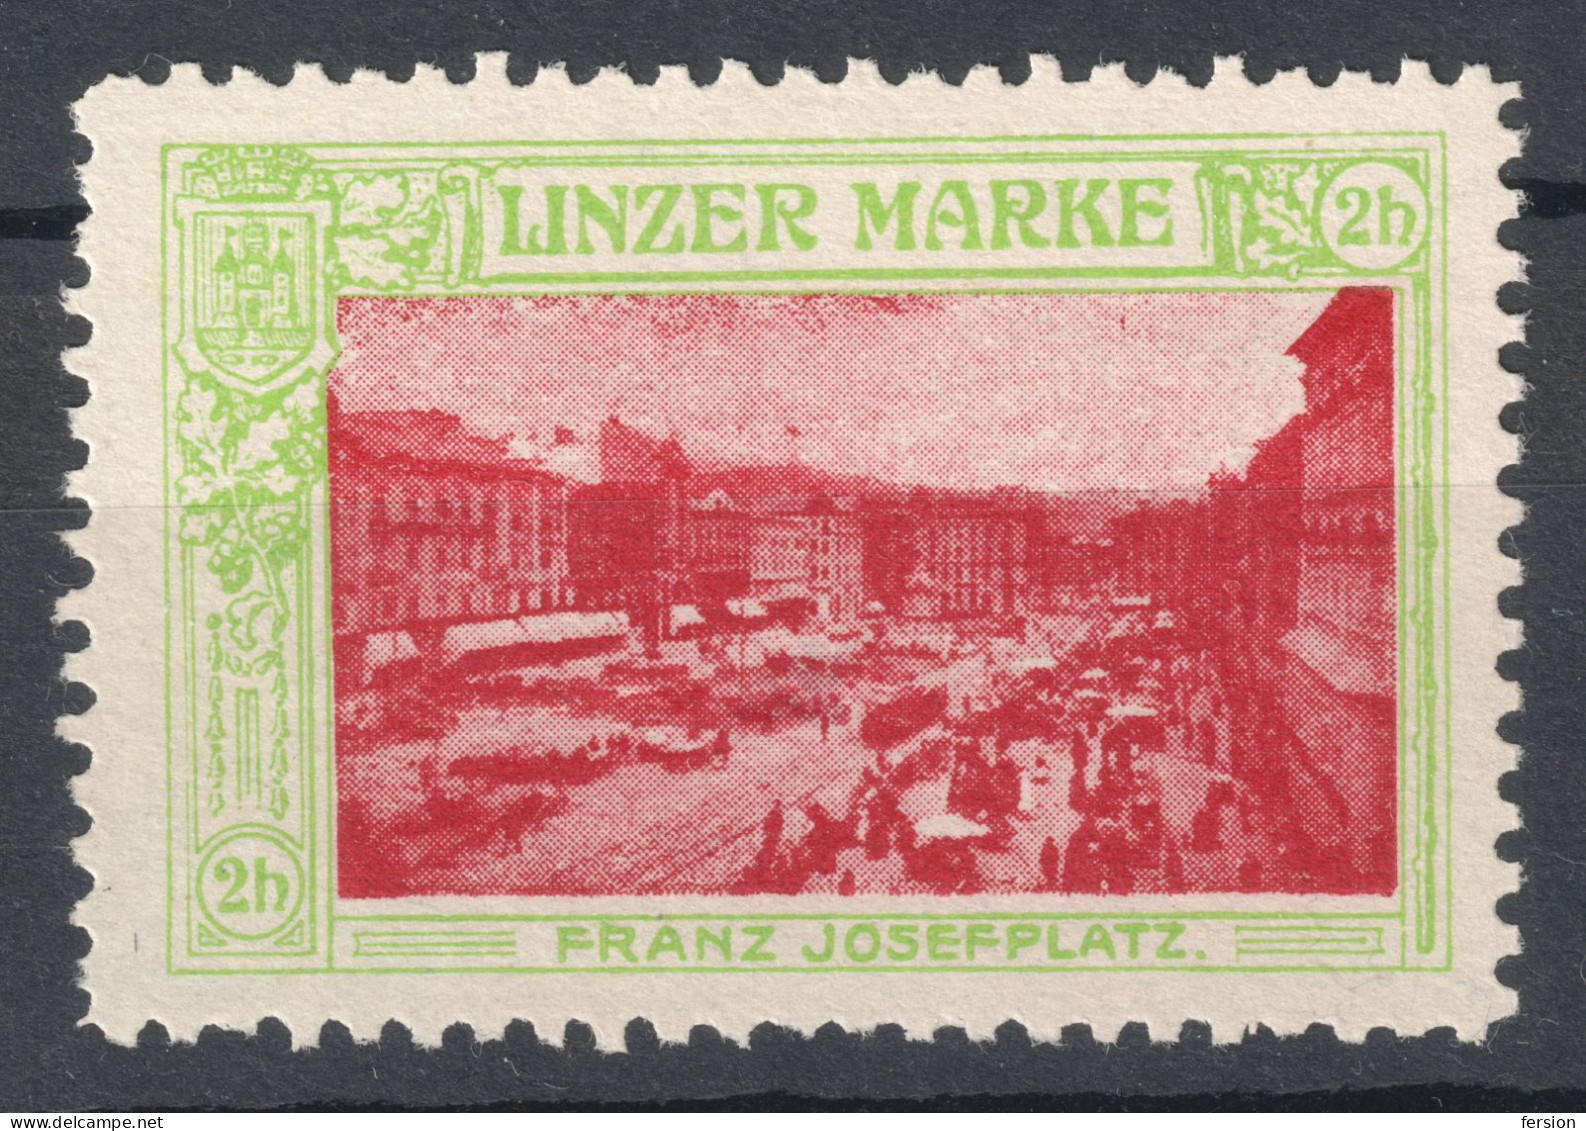 TRAM TRAMWAY Franz Joseph SQUARE - City LINZ 1910 Austria Charity Label Cinderella Vignette / LINZER MARKE - Tranvías